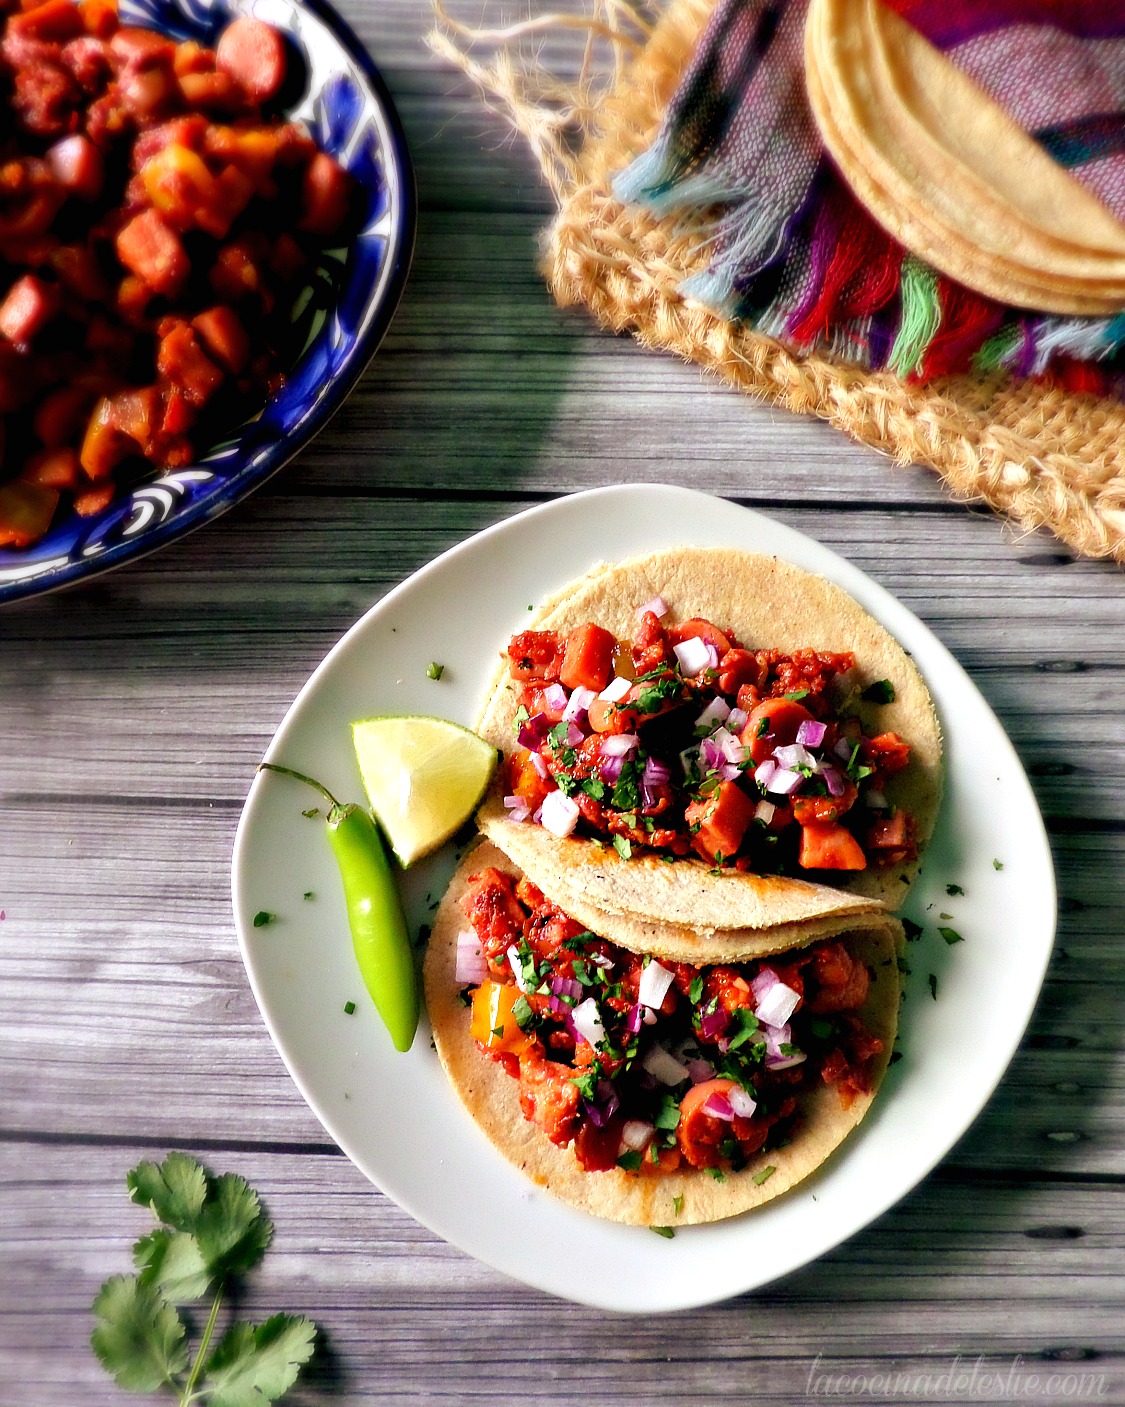 How to Make Mexican Discada - lacocinadeleslie.com